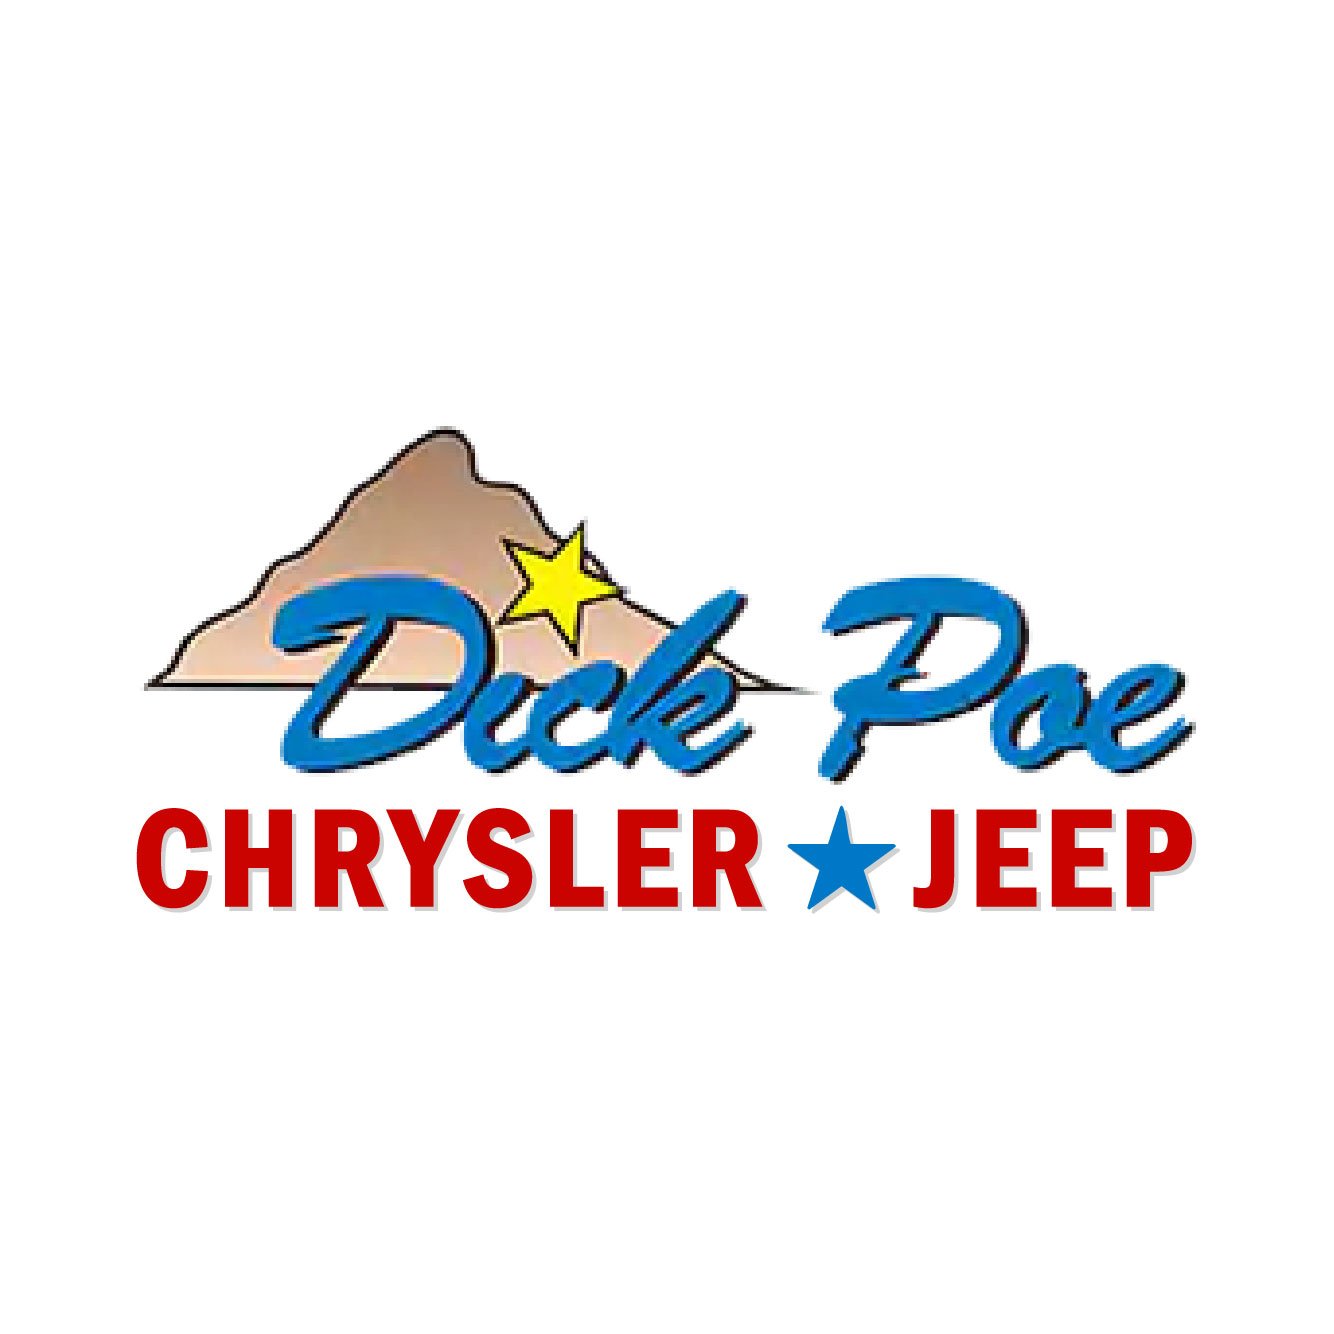 Dick Poe Chrysler Jeep